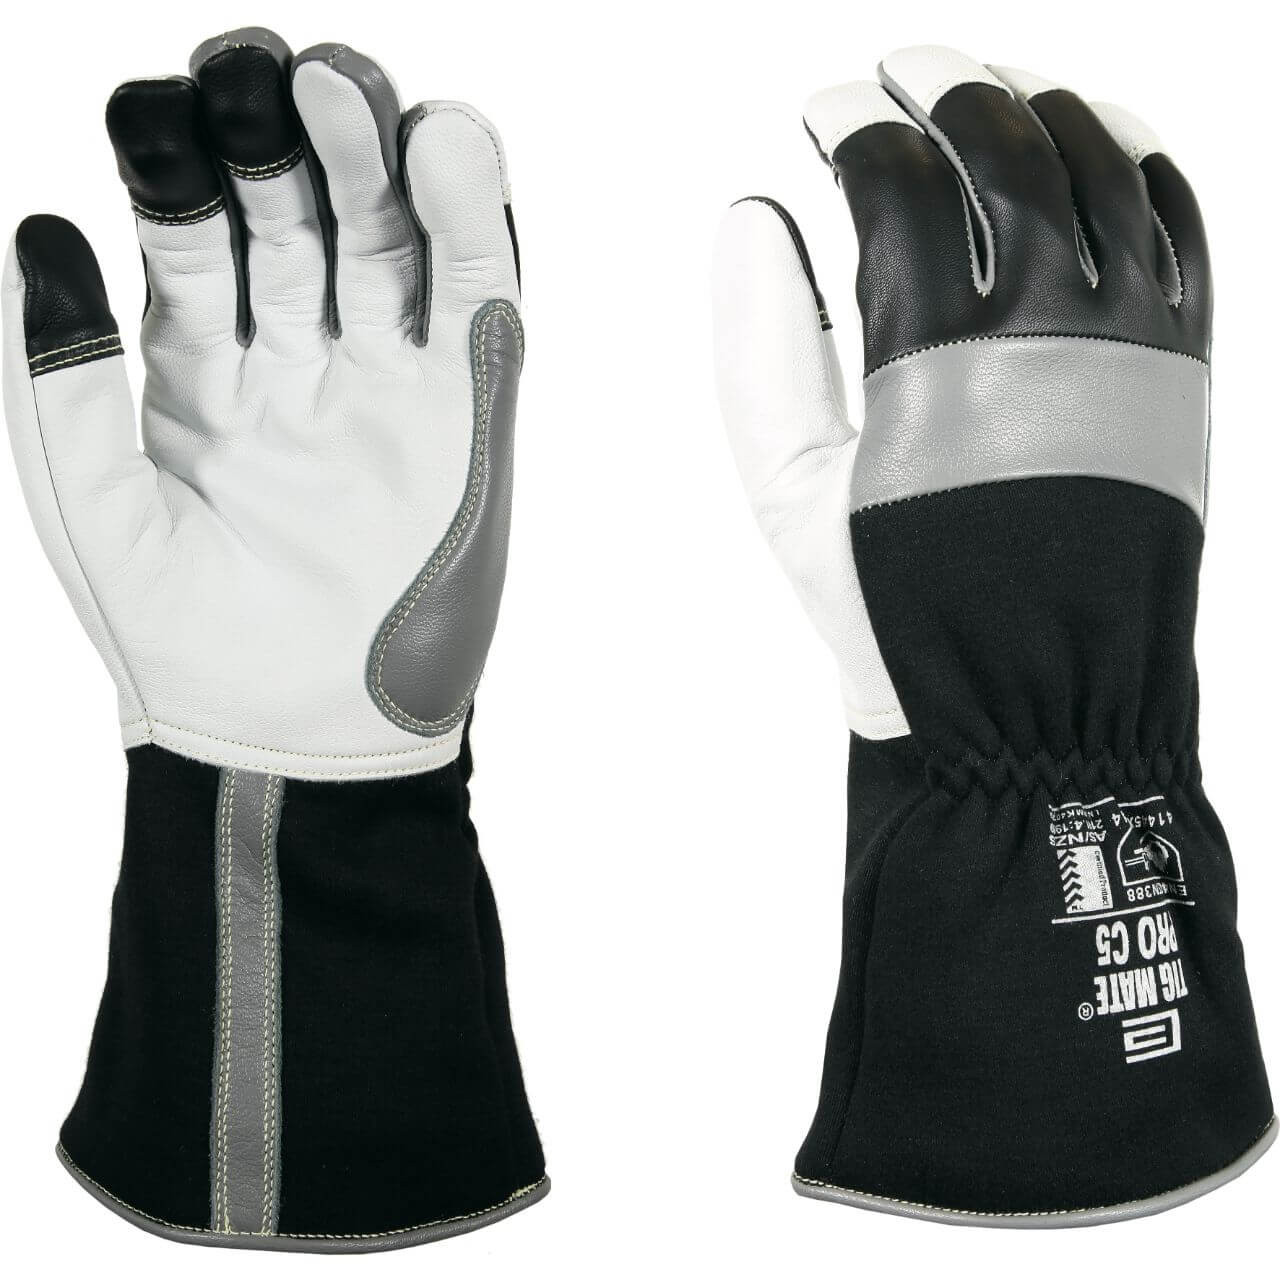 TigMate Pro C5 Tig Welding Glove